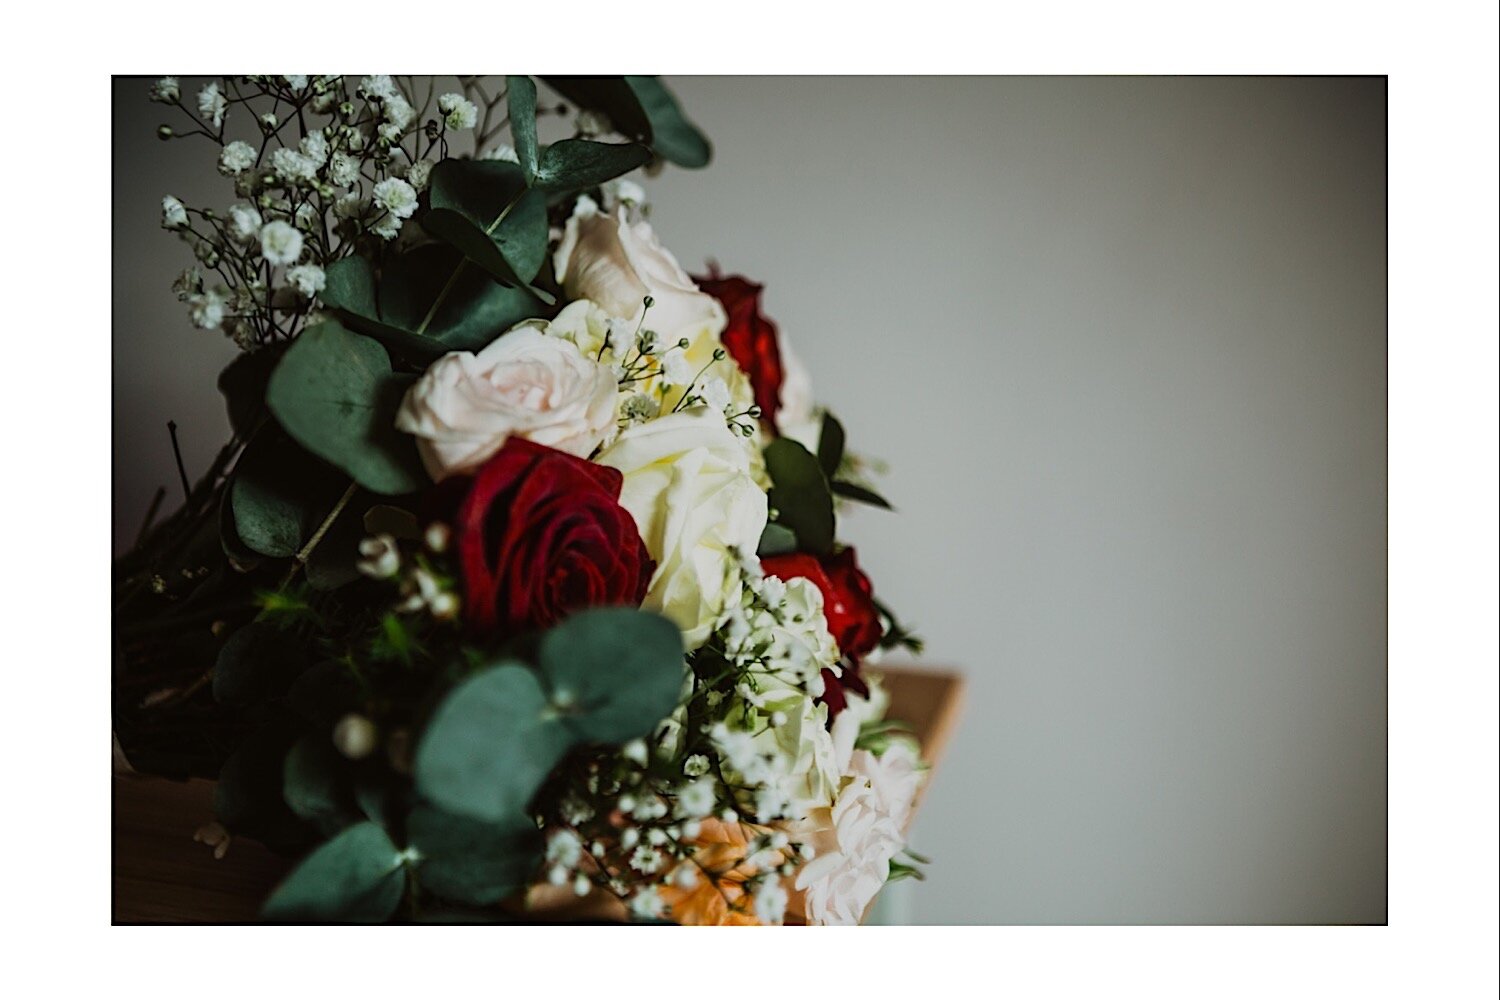 022_TWS-56_bride_floristry_bridal_photography_henley_oxfordshire_millitary_flowers_bouquet_crooked_wedding_groom_winter_billet.jpg